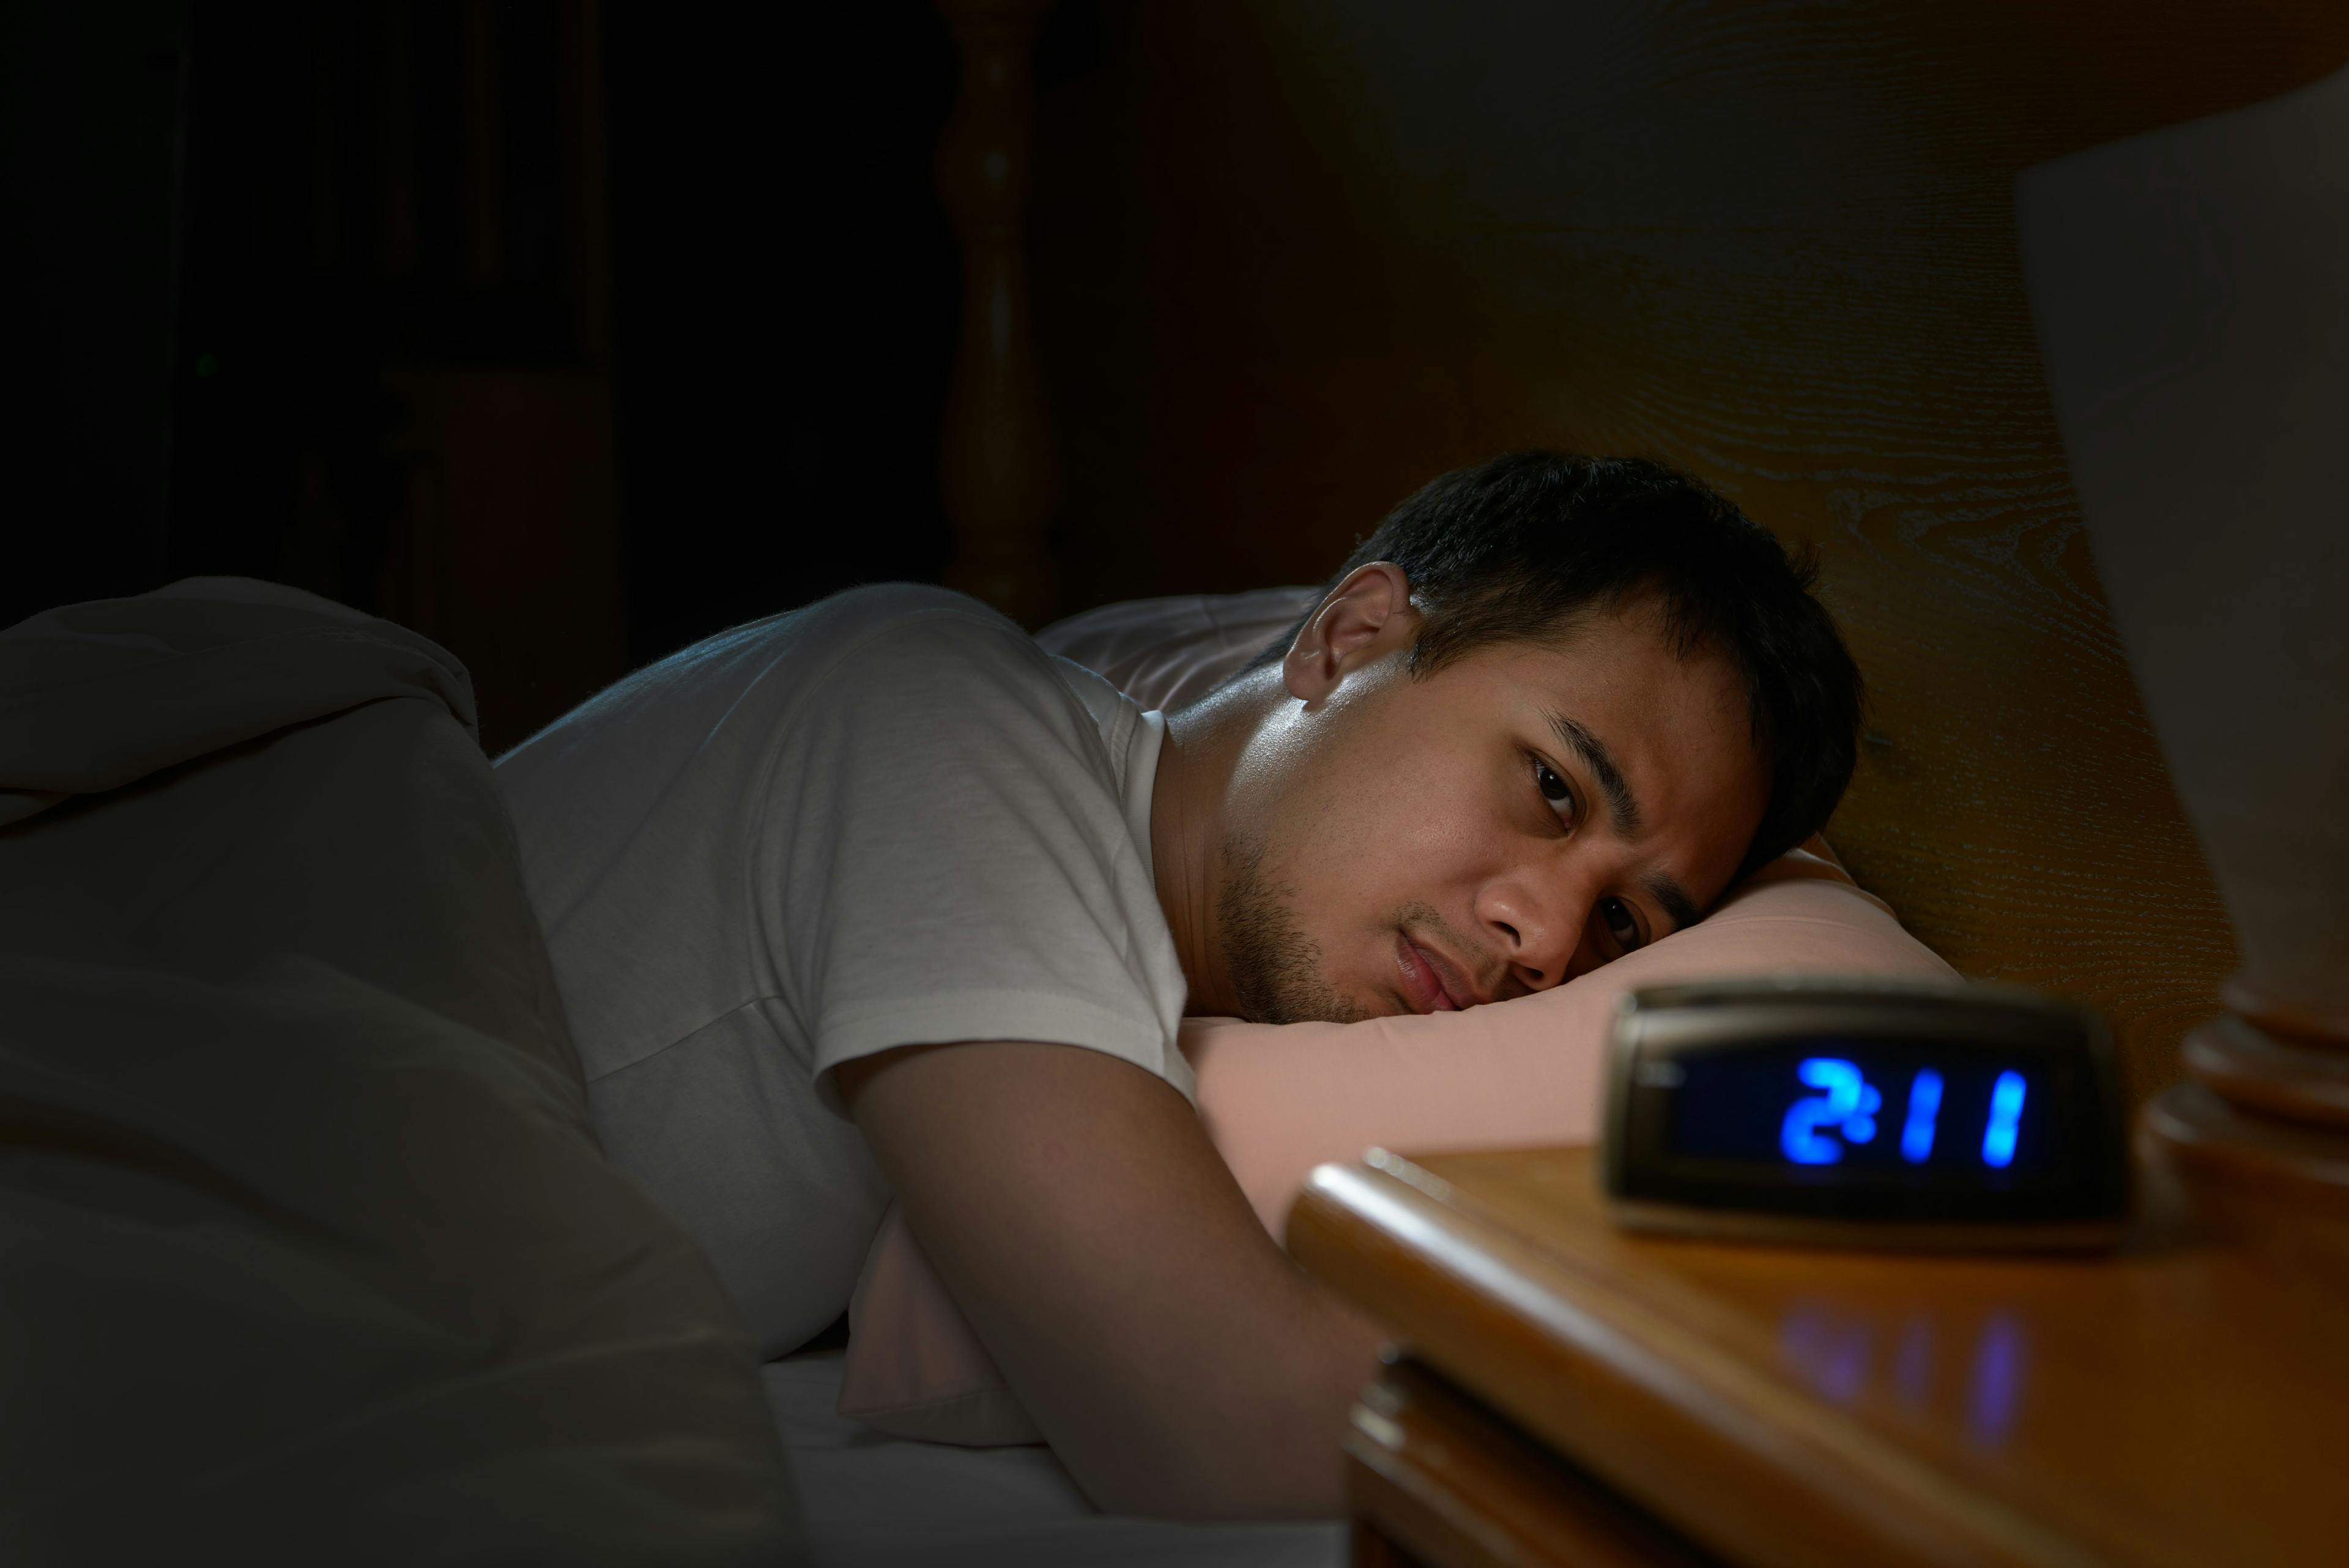 Man Enduring Insomnia | image credit: amenic181 - stock.adobe.com